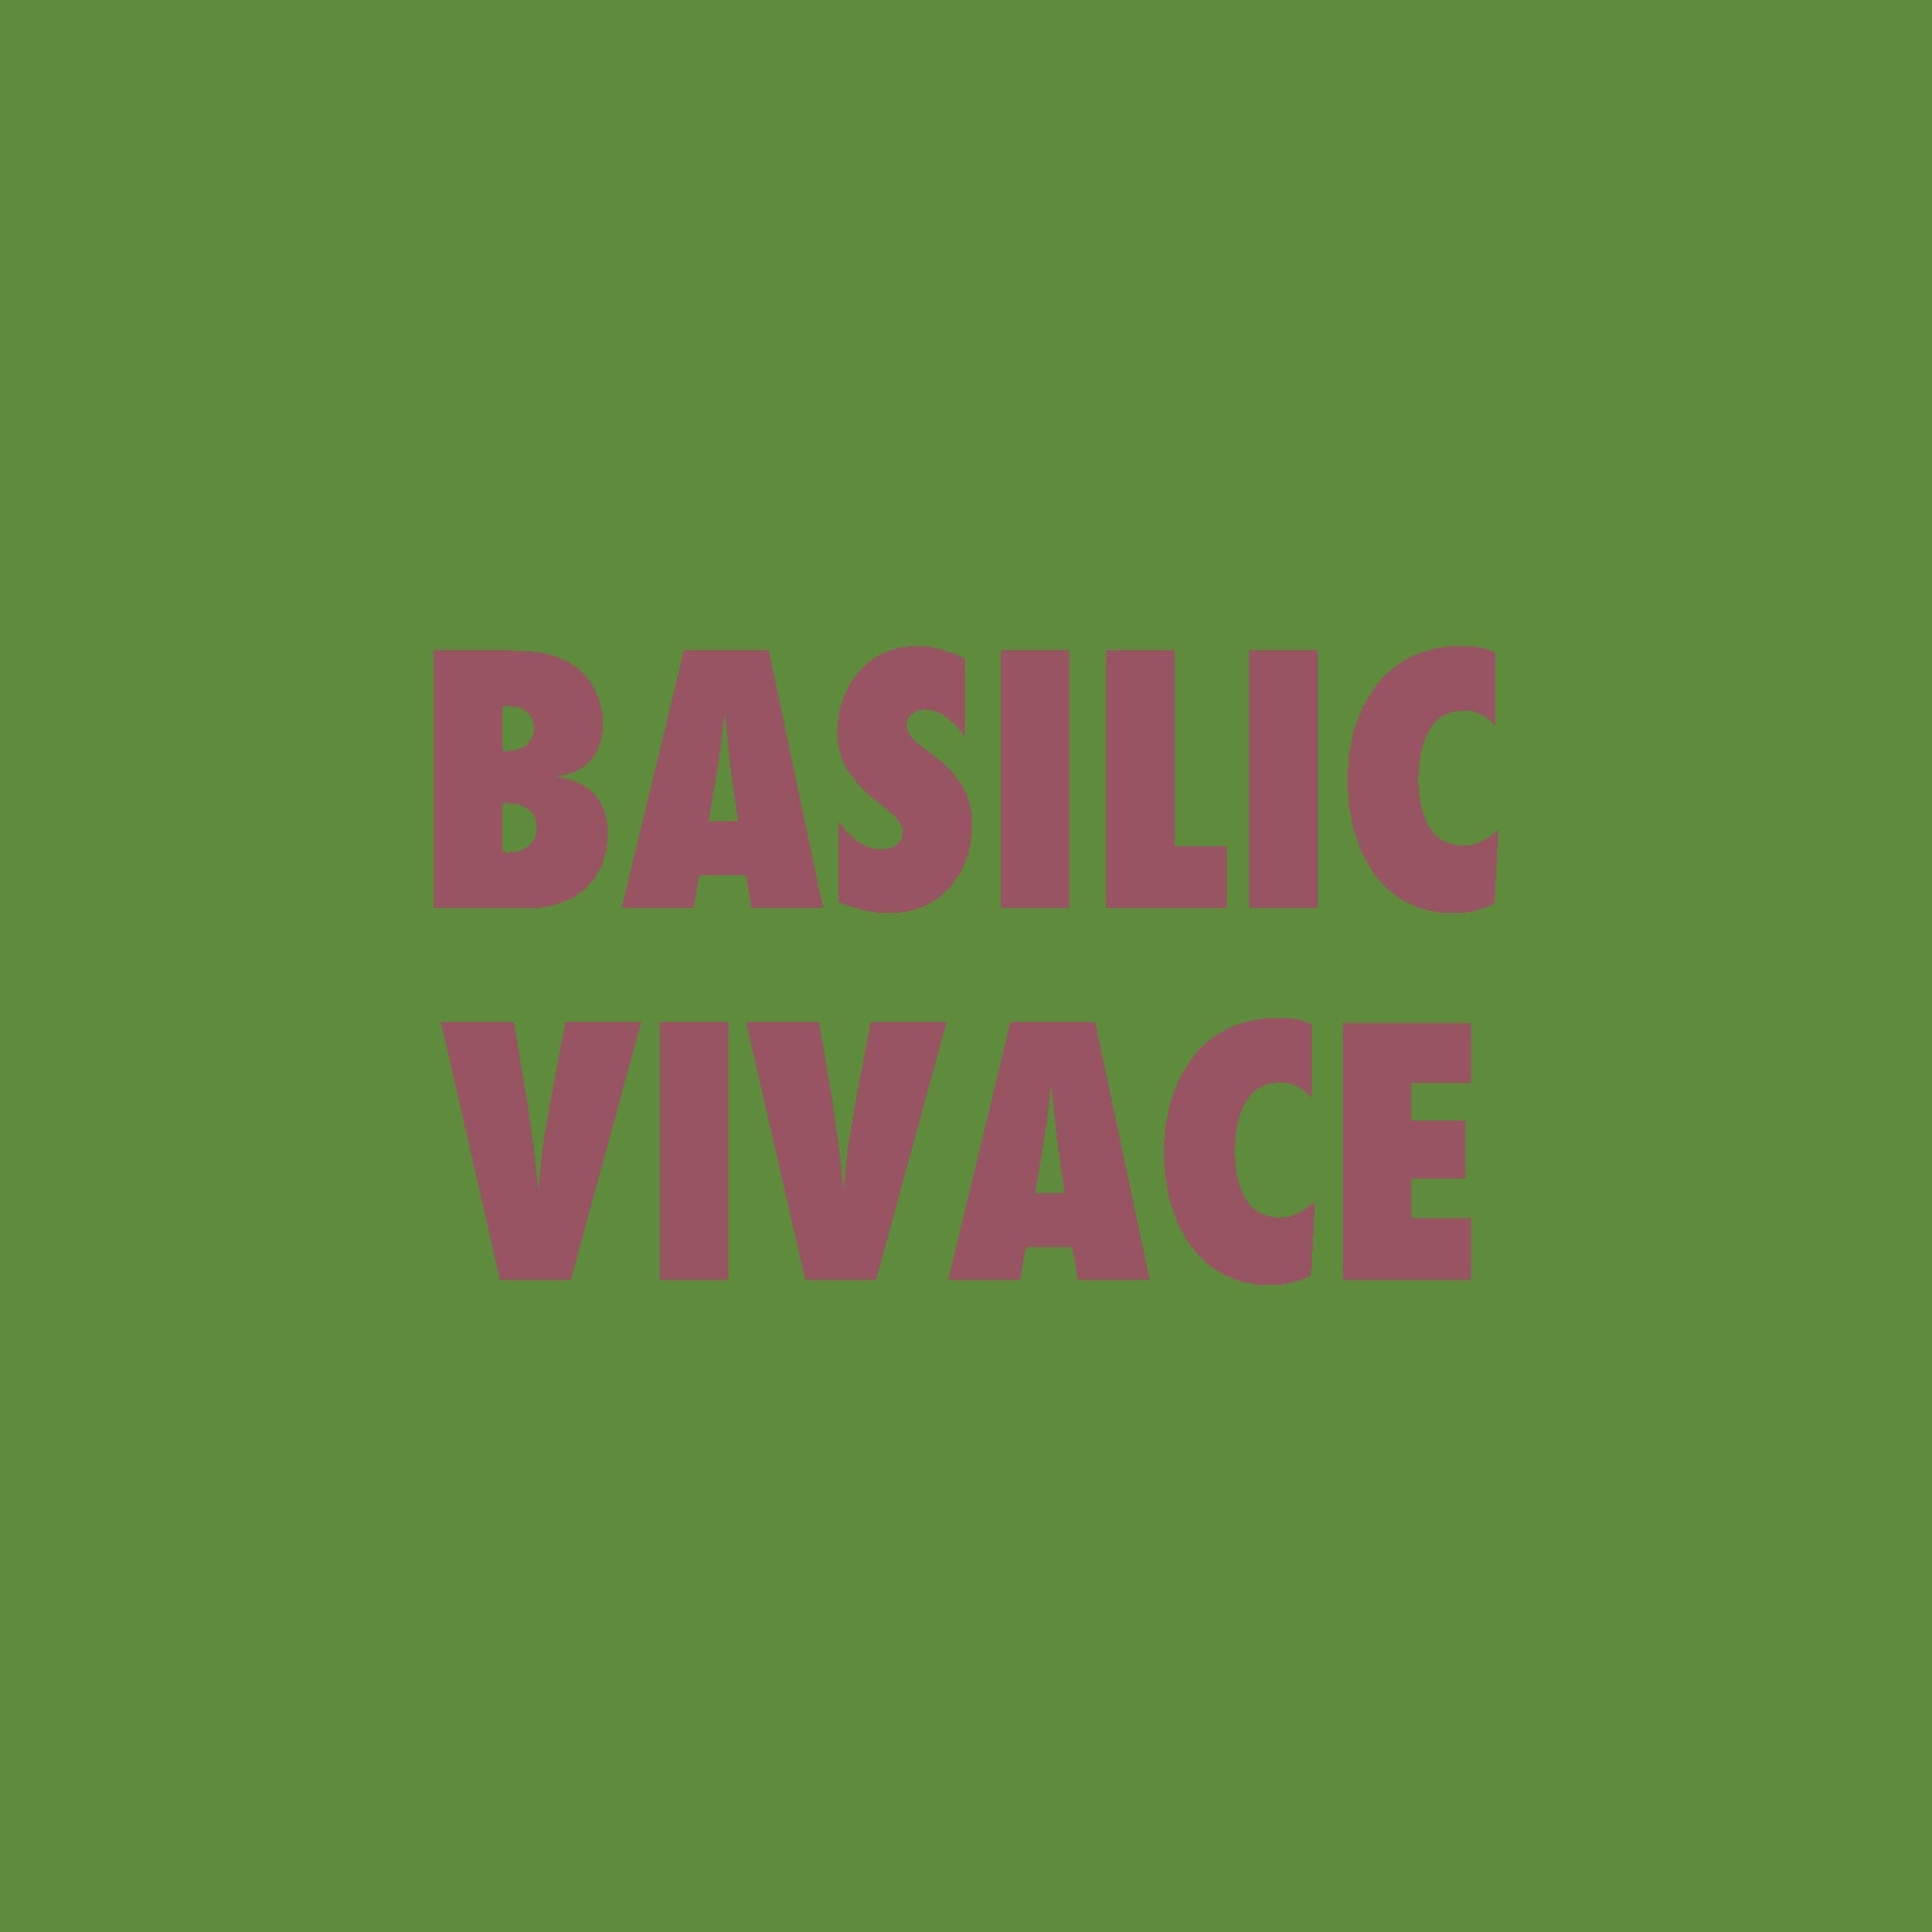 Basilic vivace